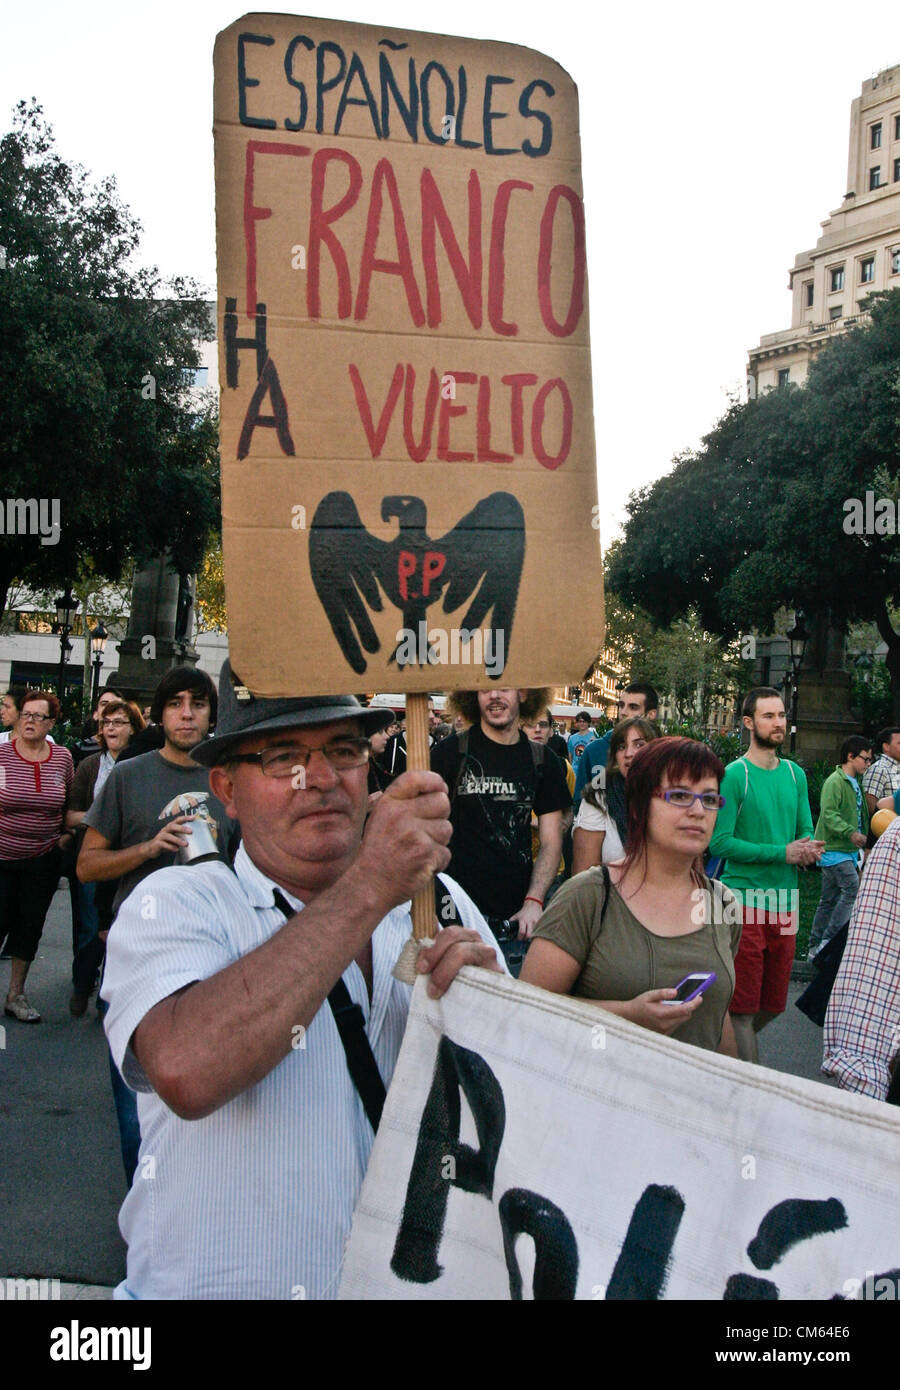 Barcelona, Spain. 13th October, 2012. Global Noise protests against public debt - Barcelona Stock Photo